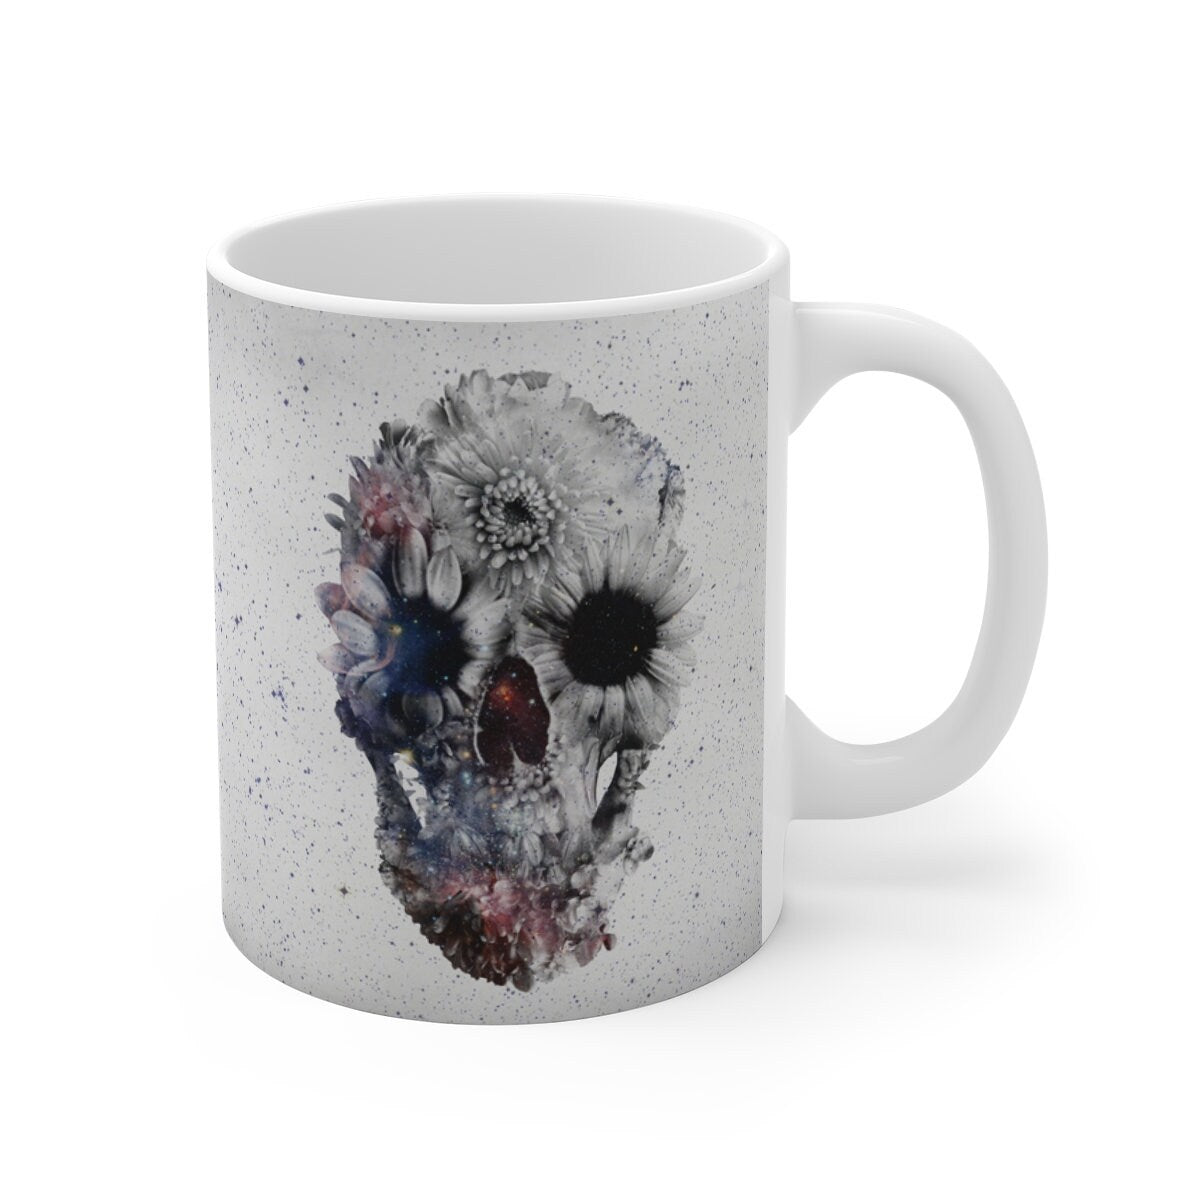 Skull Mug Gift, Flower Sugar Skull Mug, Boho Skull Ceramic Coffee Mug, Gothic Floral Skull Mug, Sugar Skull Art Gothic Kitchenware Gift